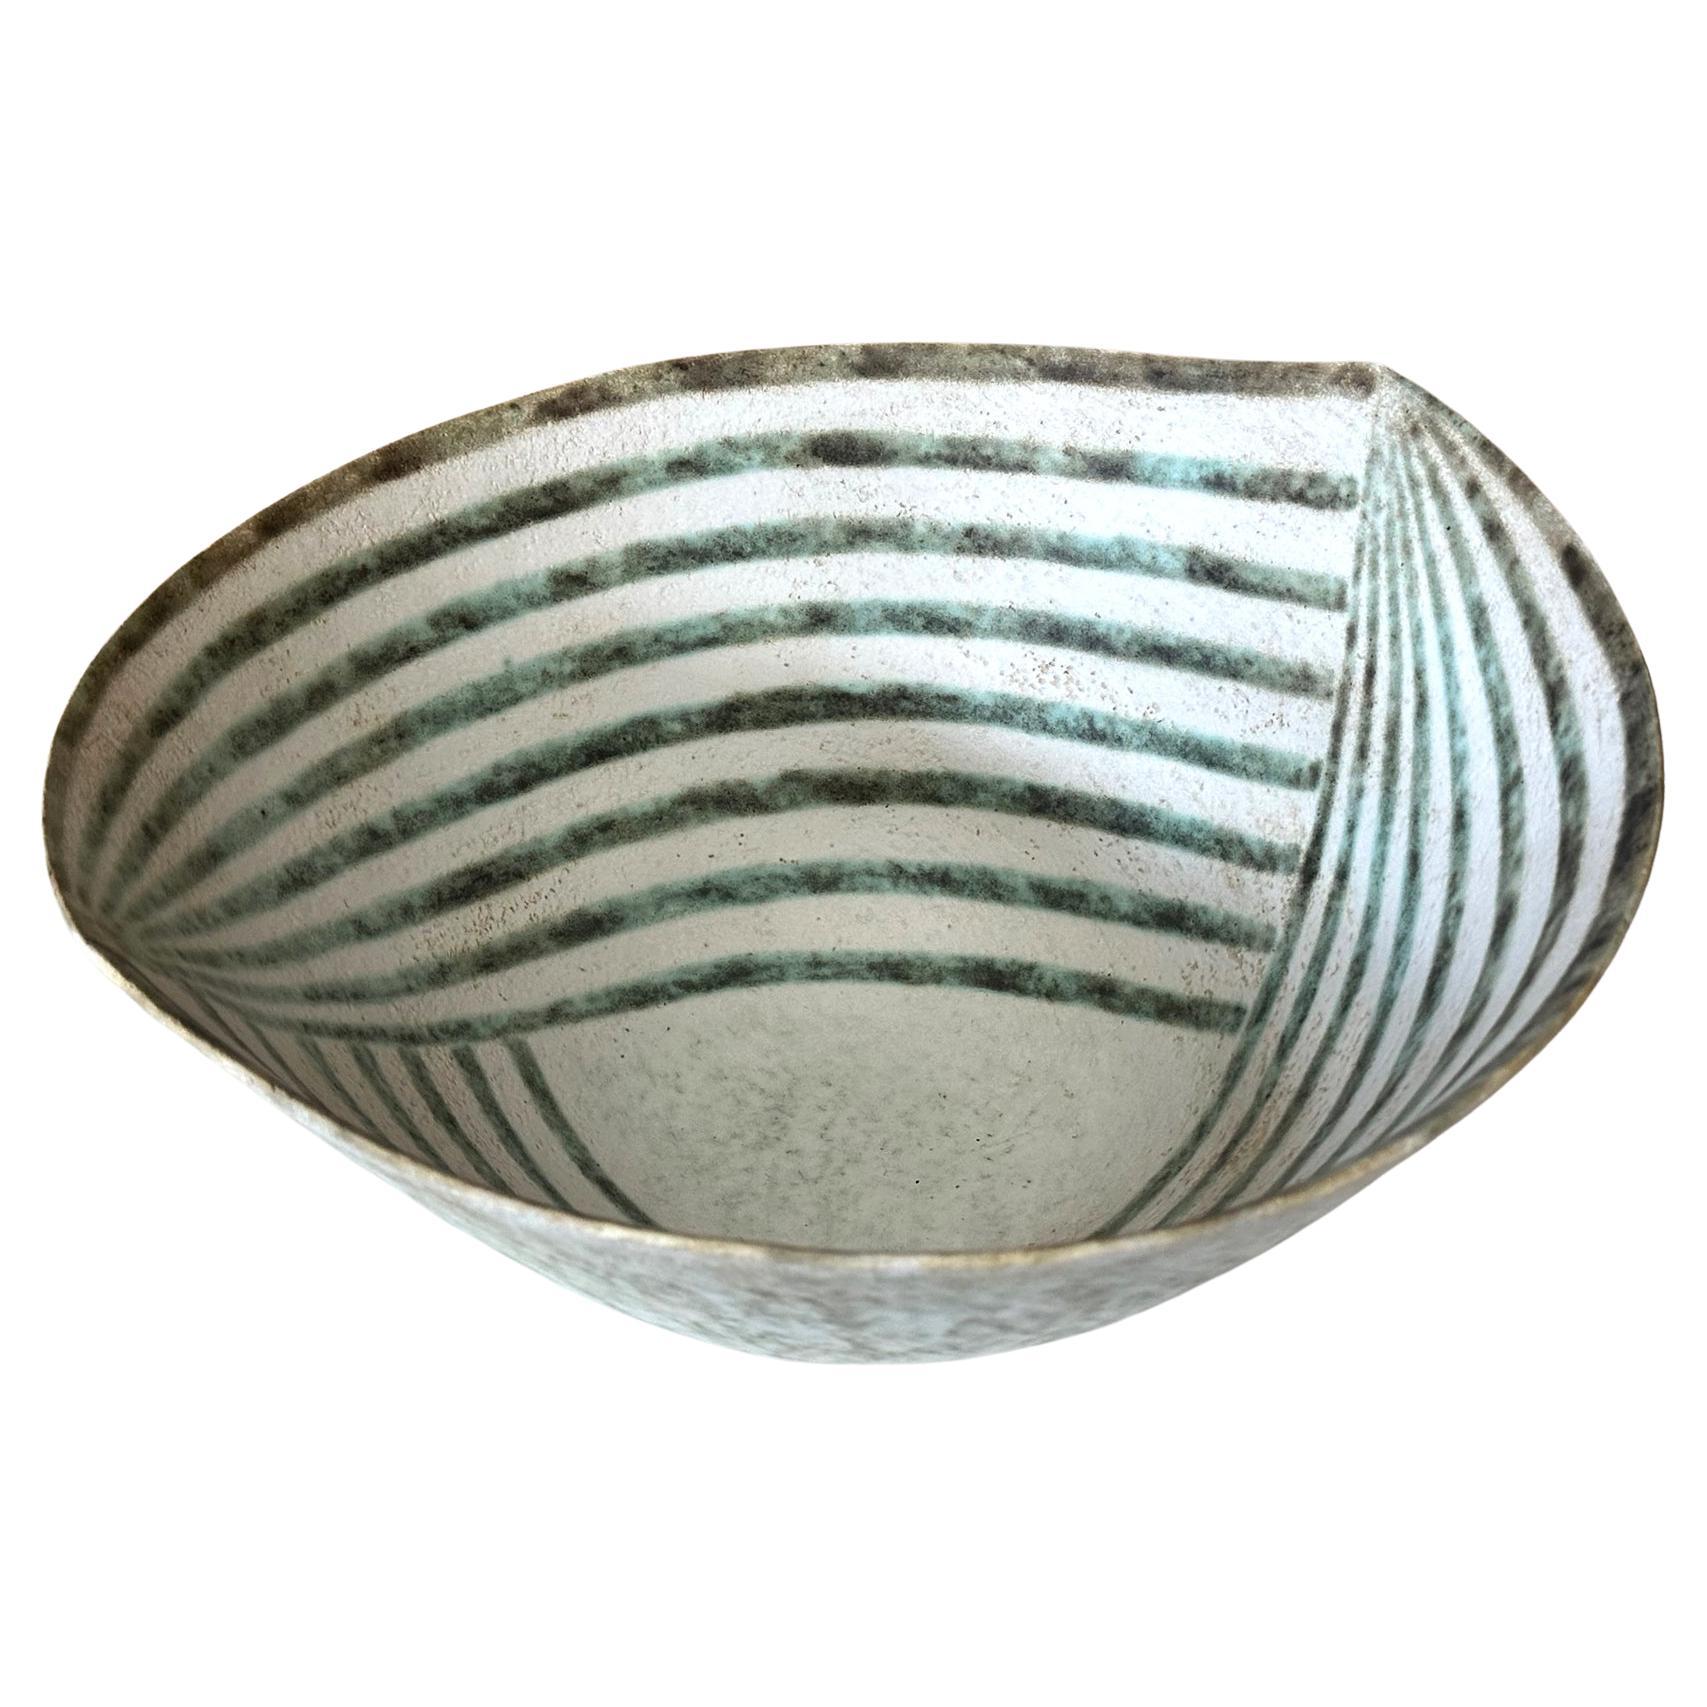 Large Ceramic Leaf Bowl with Banded Glaze by John Ward